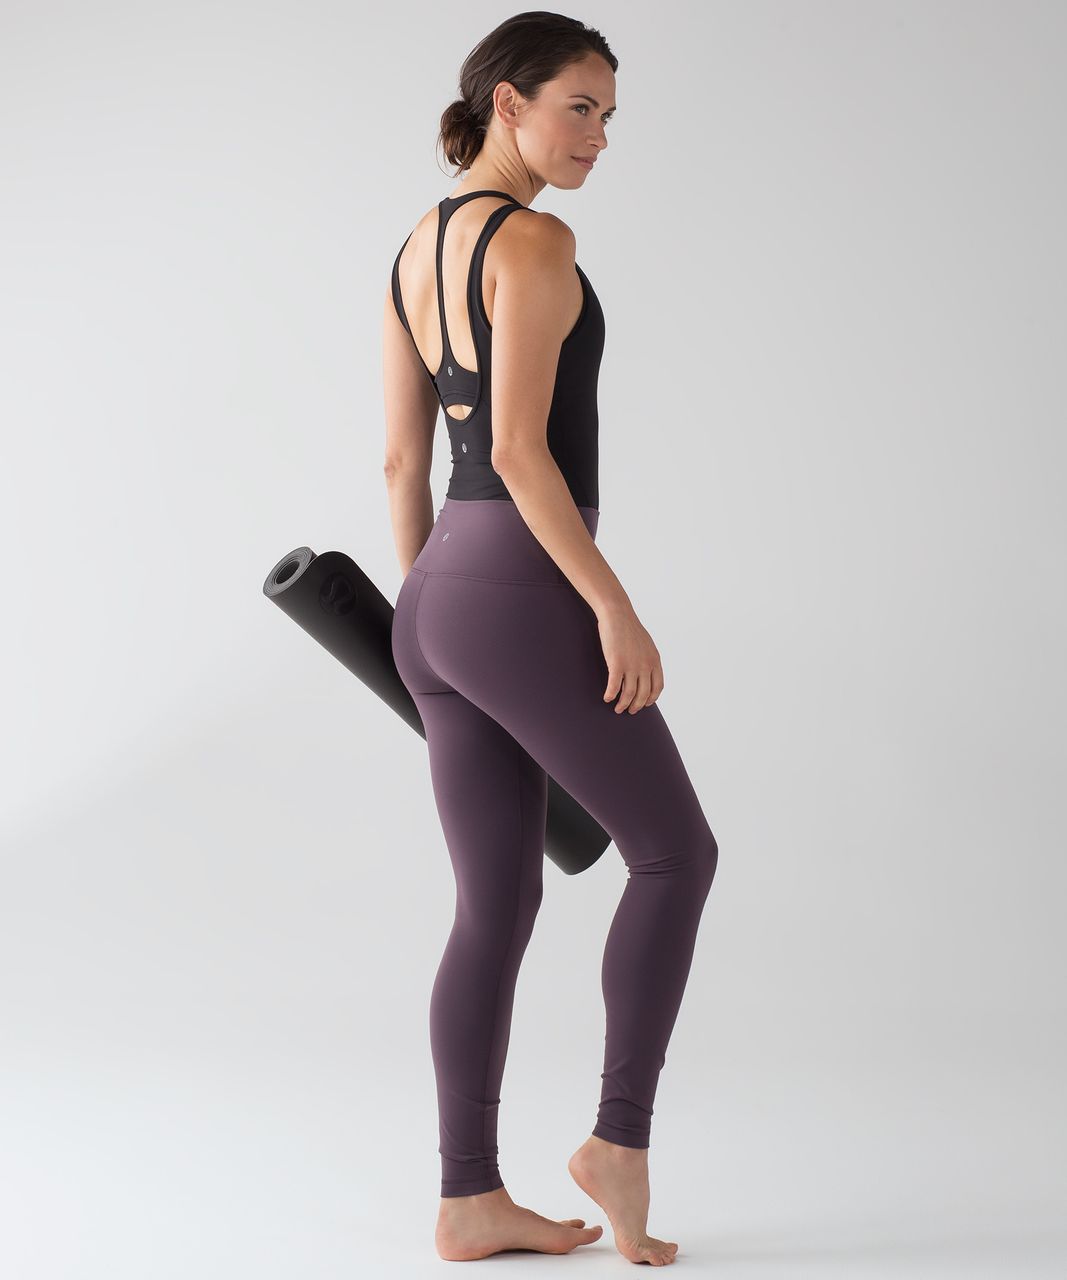 Yoga Bodysuit Lululemon - YogaWalls